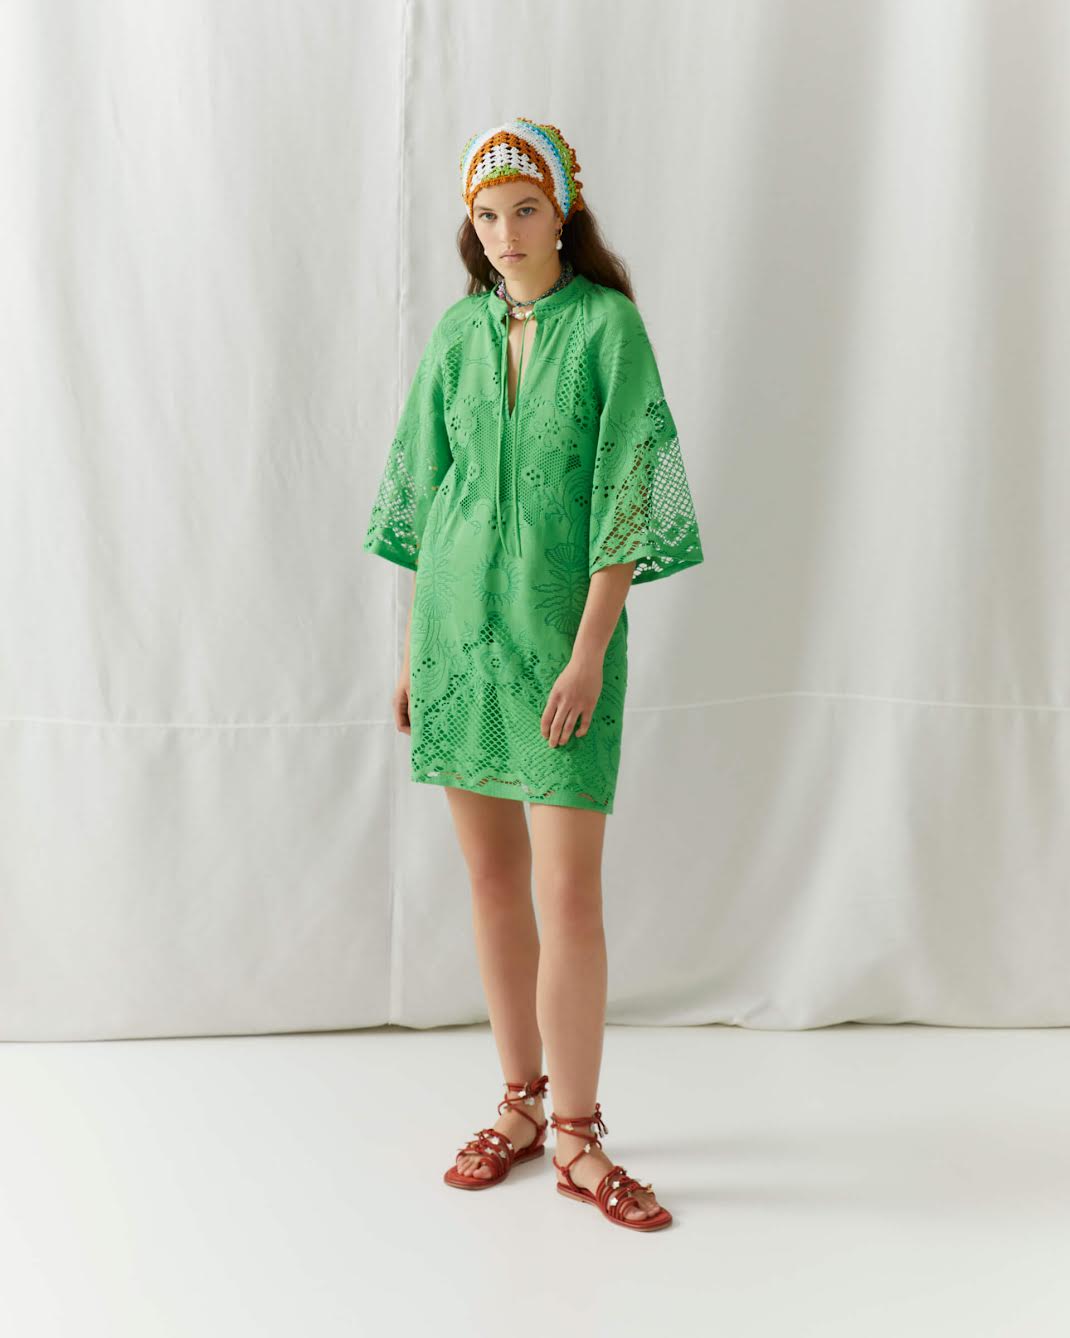 Beatrice B - Soleil Flash Green Lace Dress